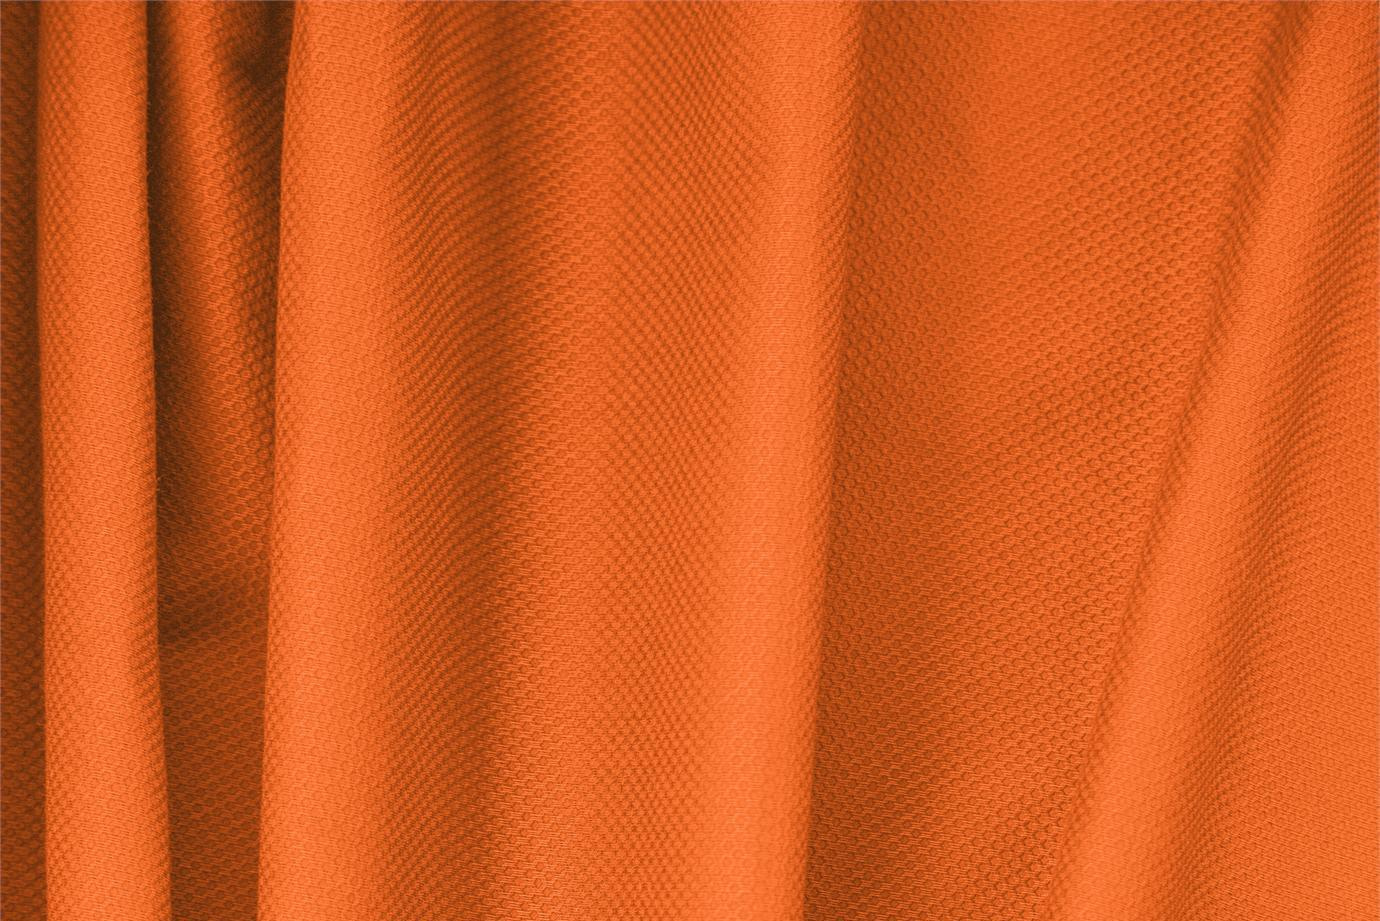 Tangerine Orange Cotton, Stretch Pique Stretch fabric for dressmaking